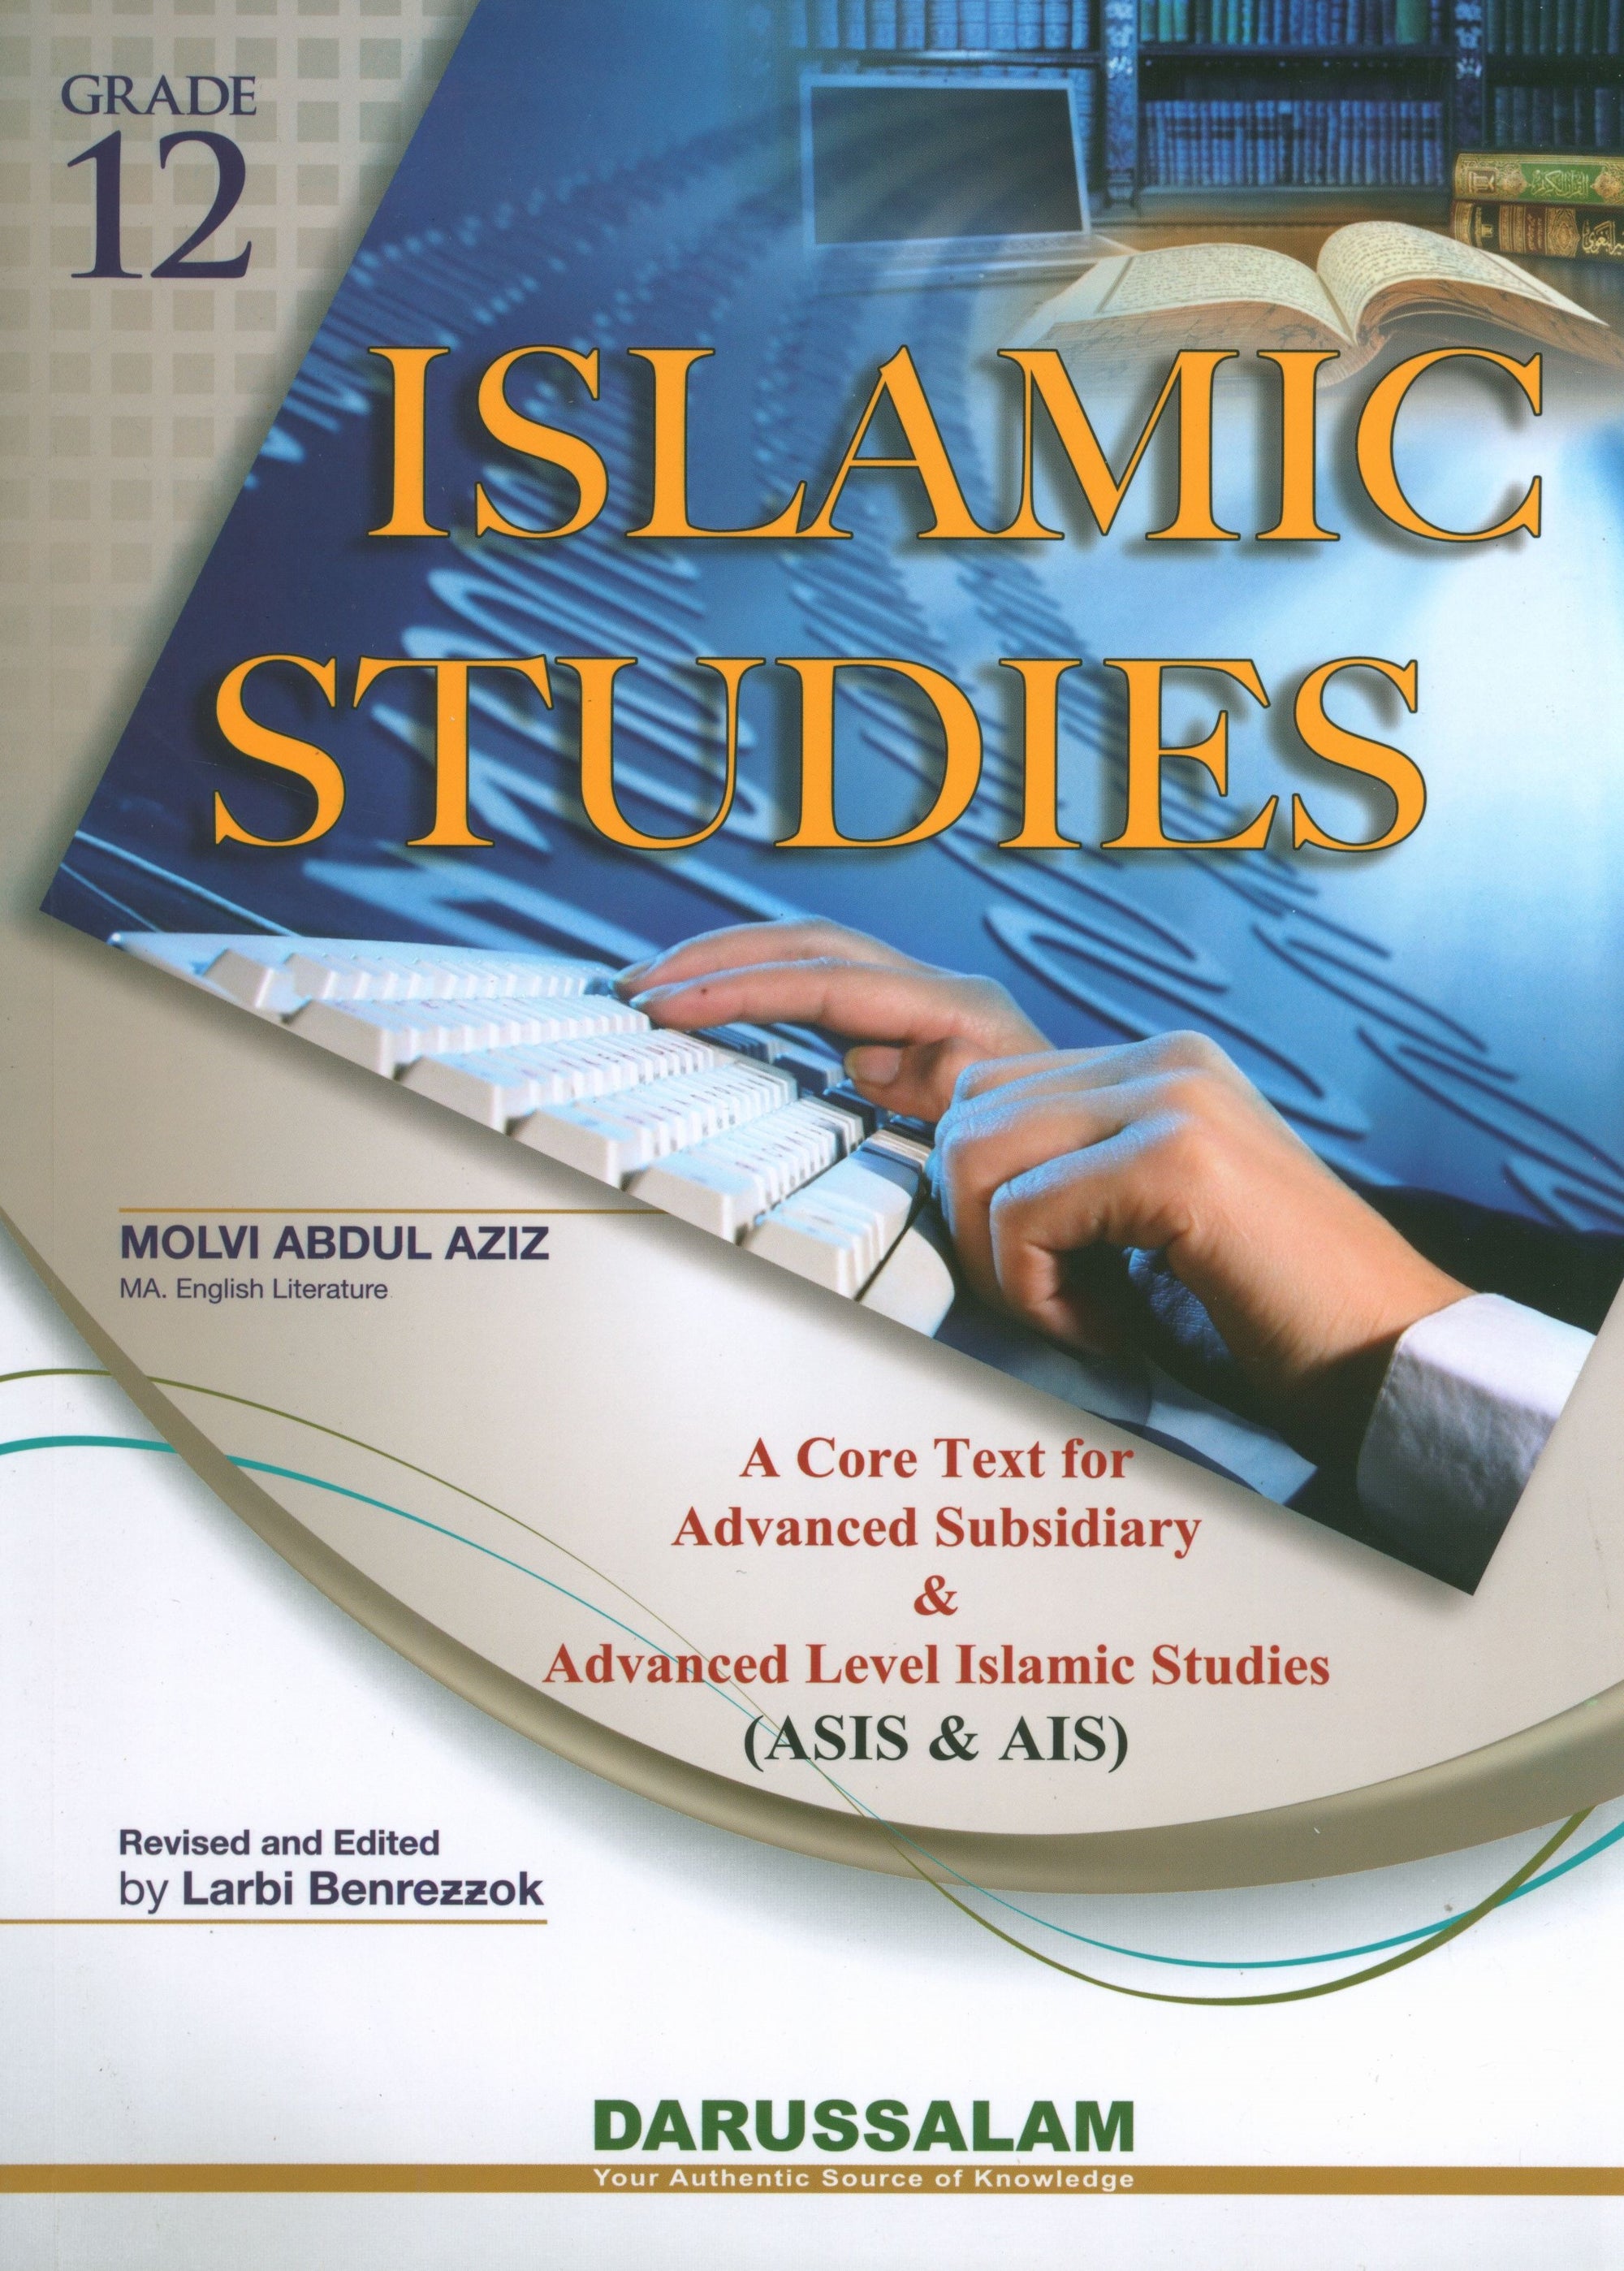 Darussalam Islamic Studies Grade 12